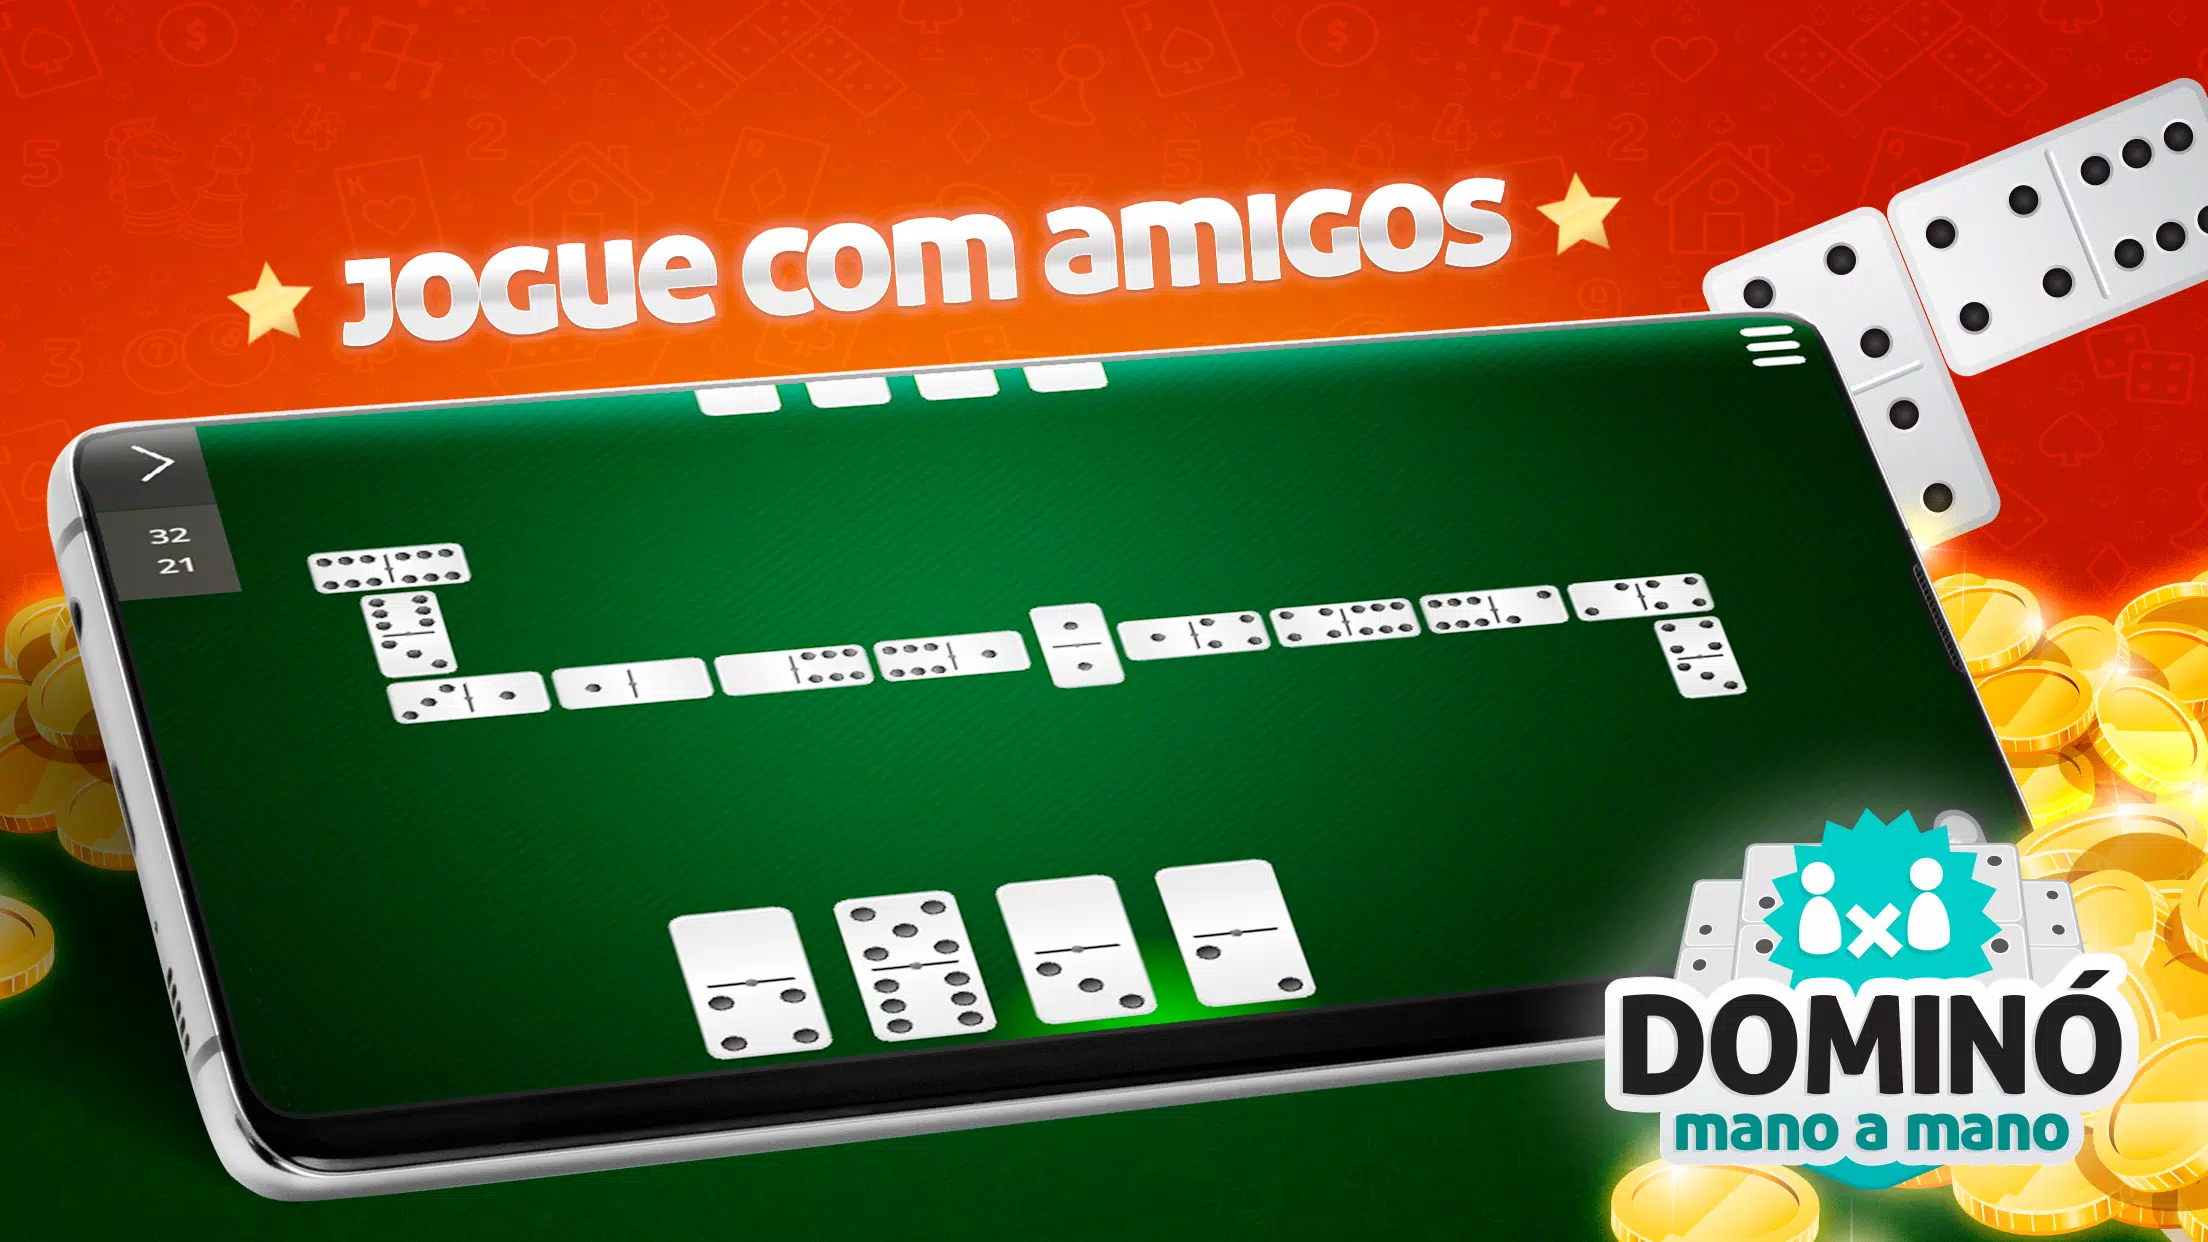 Play Trilha Online - Jogo Tabuleiro Online on PC for Free